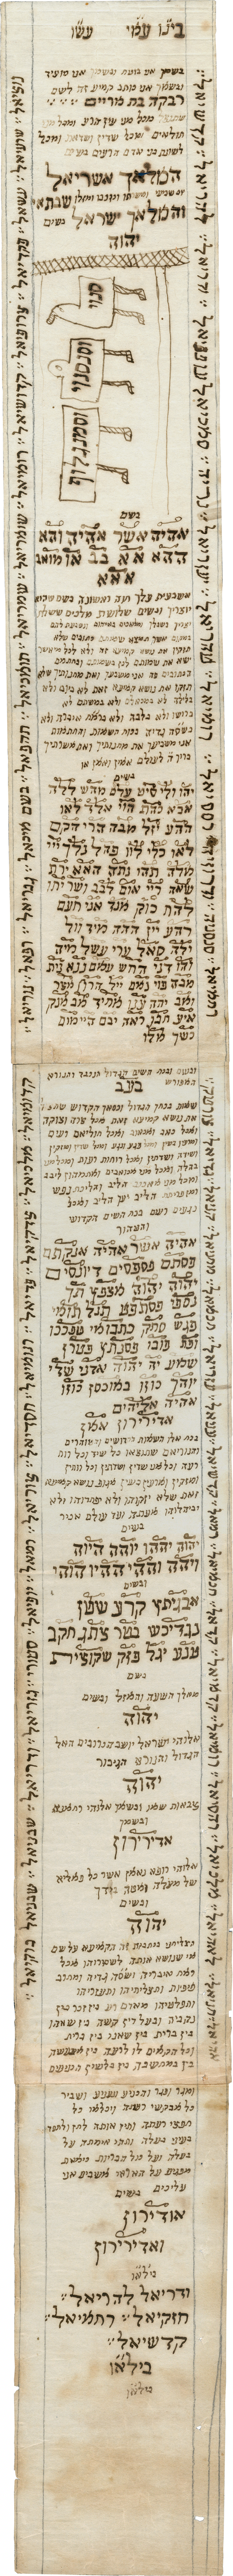 Amulet written for Rivkah bat Miriam